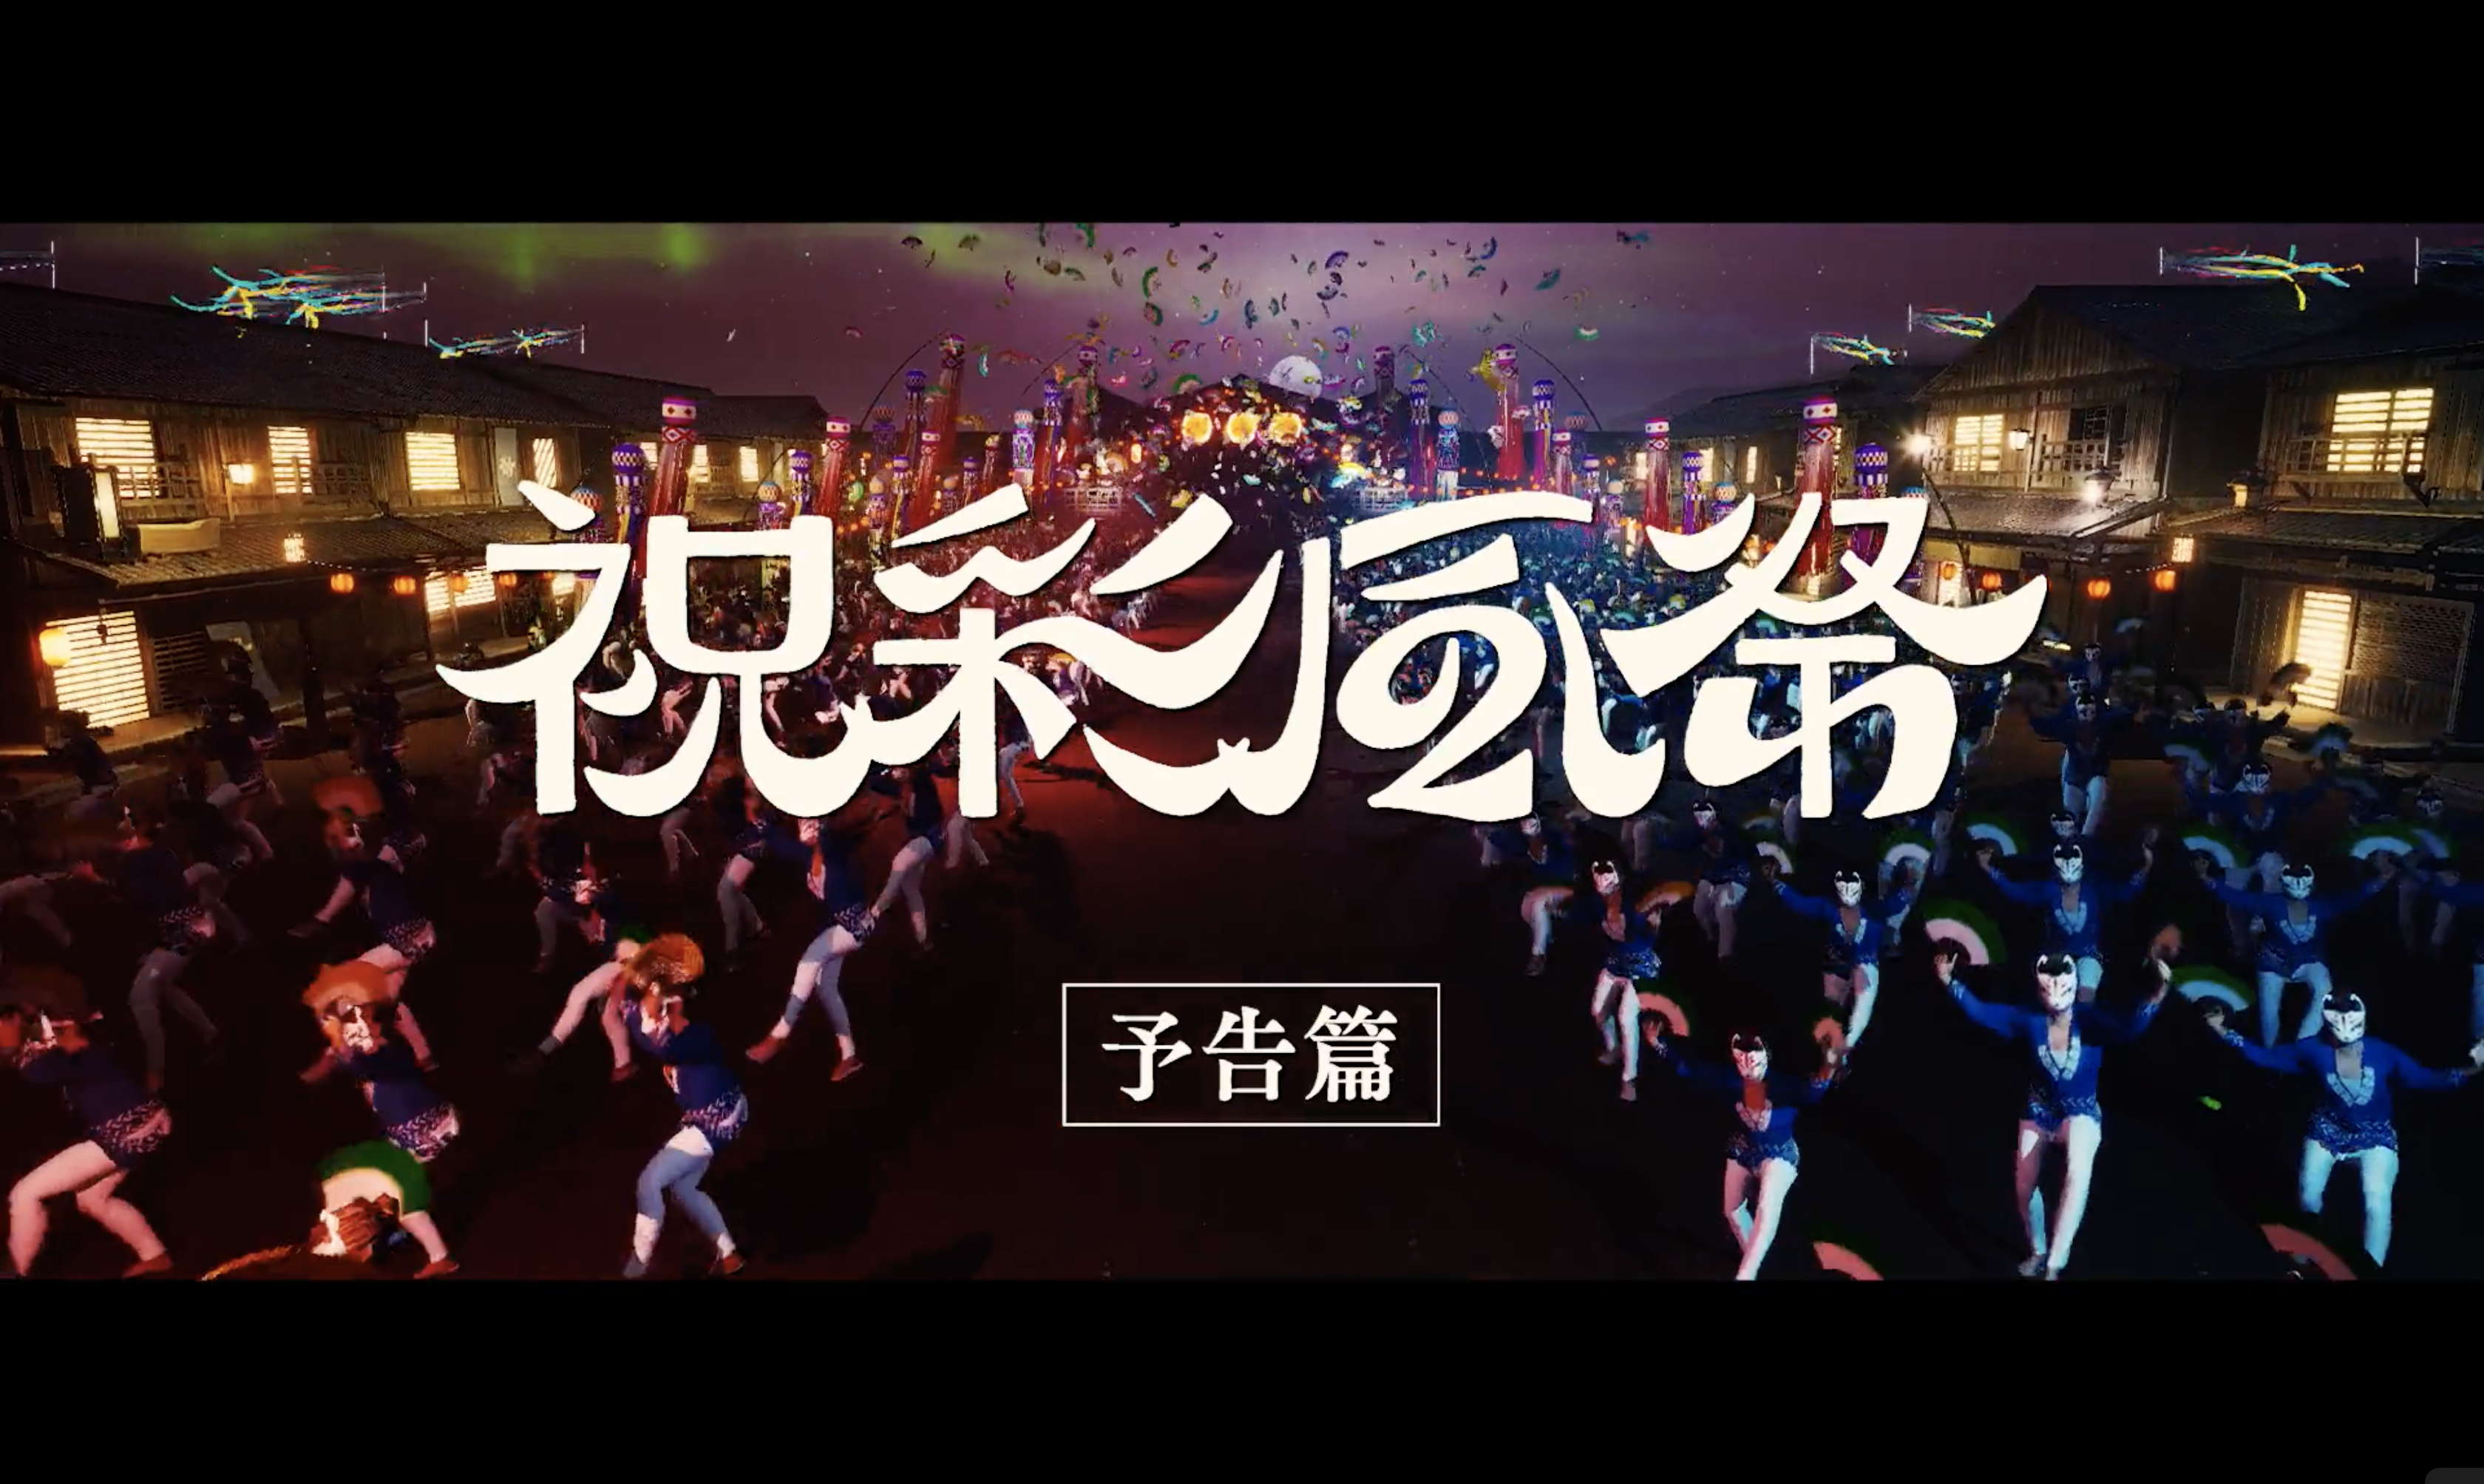 WOW25「祝彩風祭」Teaser Movie